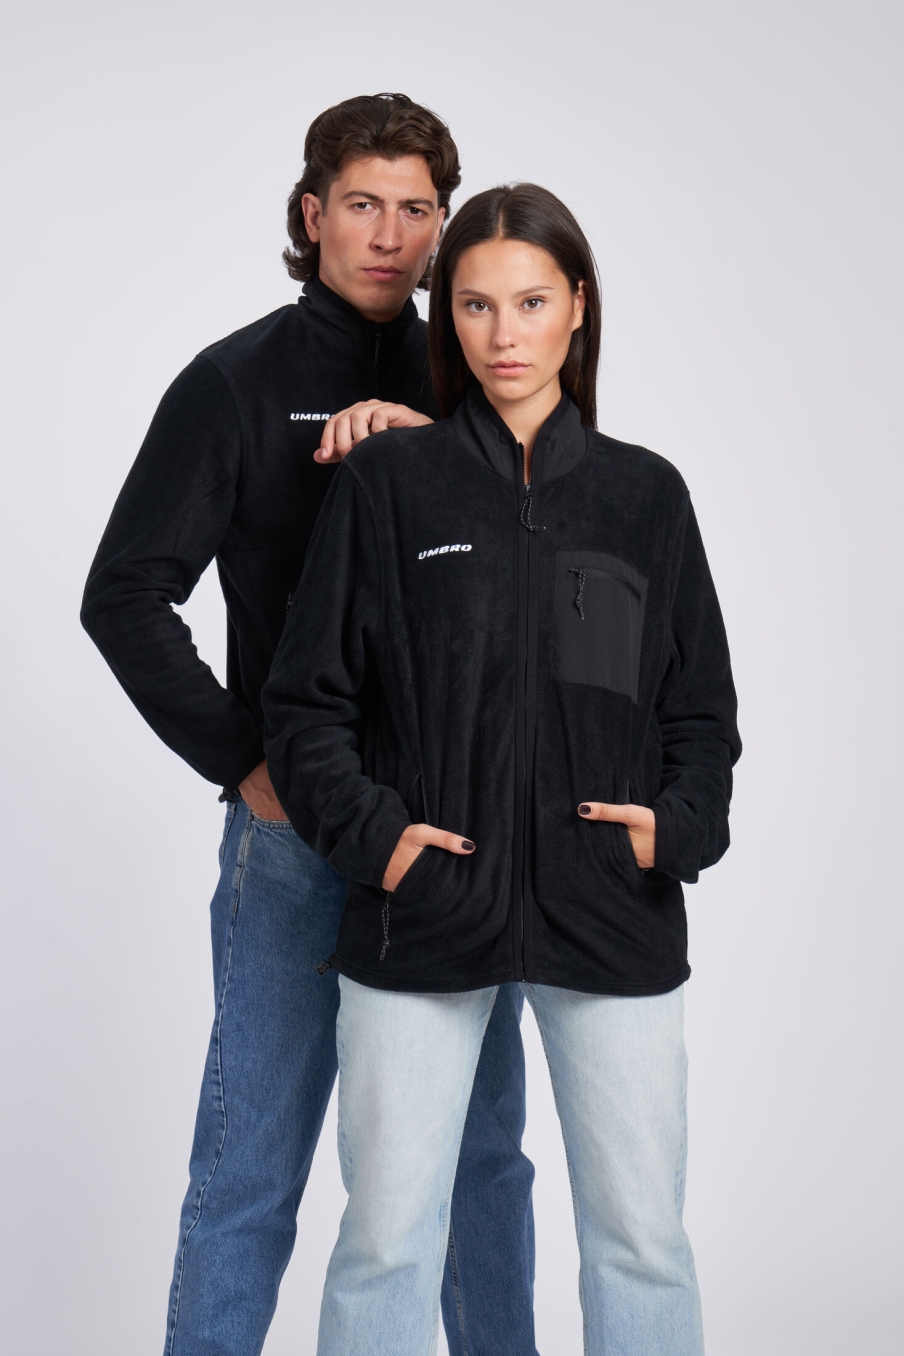 https://umbro.es/16854-home_default/chaqueta-polar-umbro-fleece-jacket-black.jpg